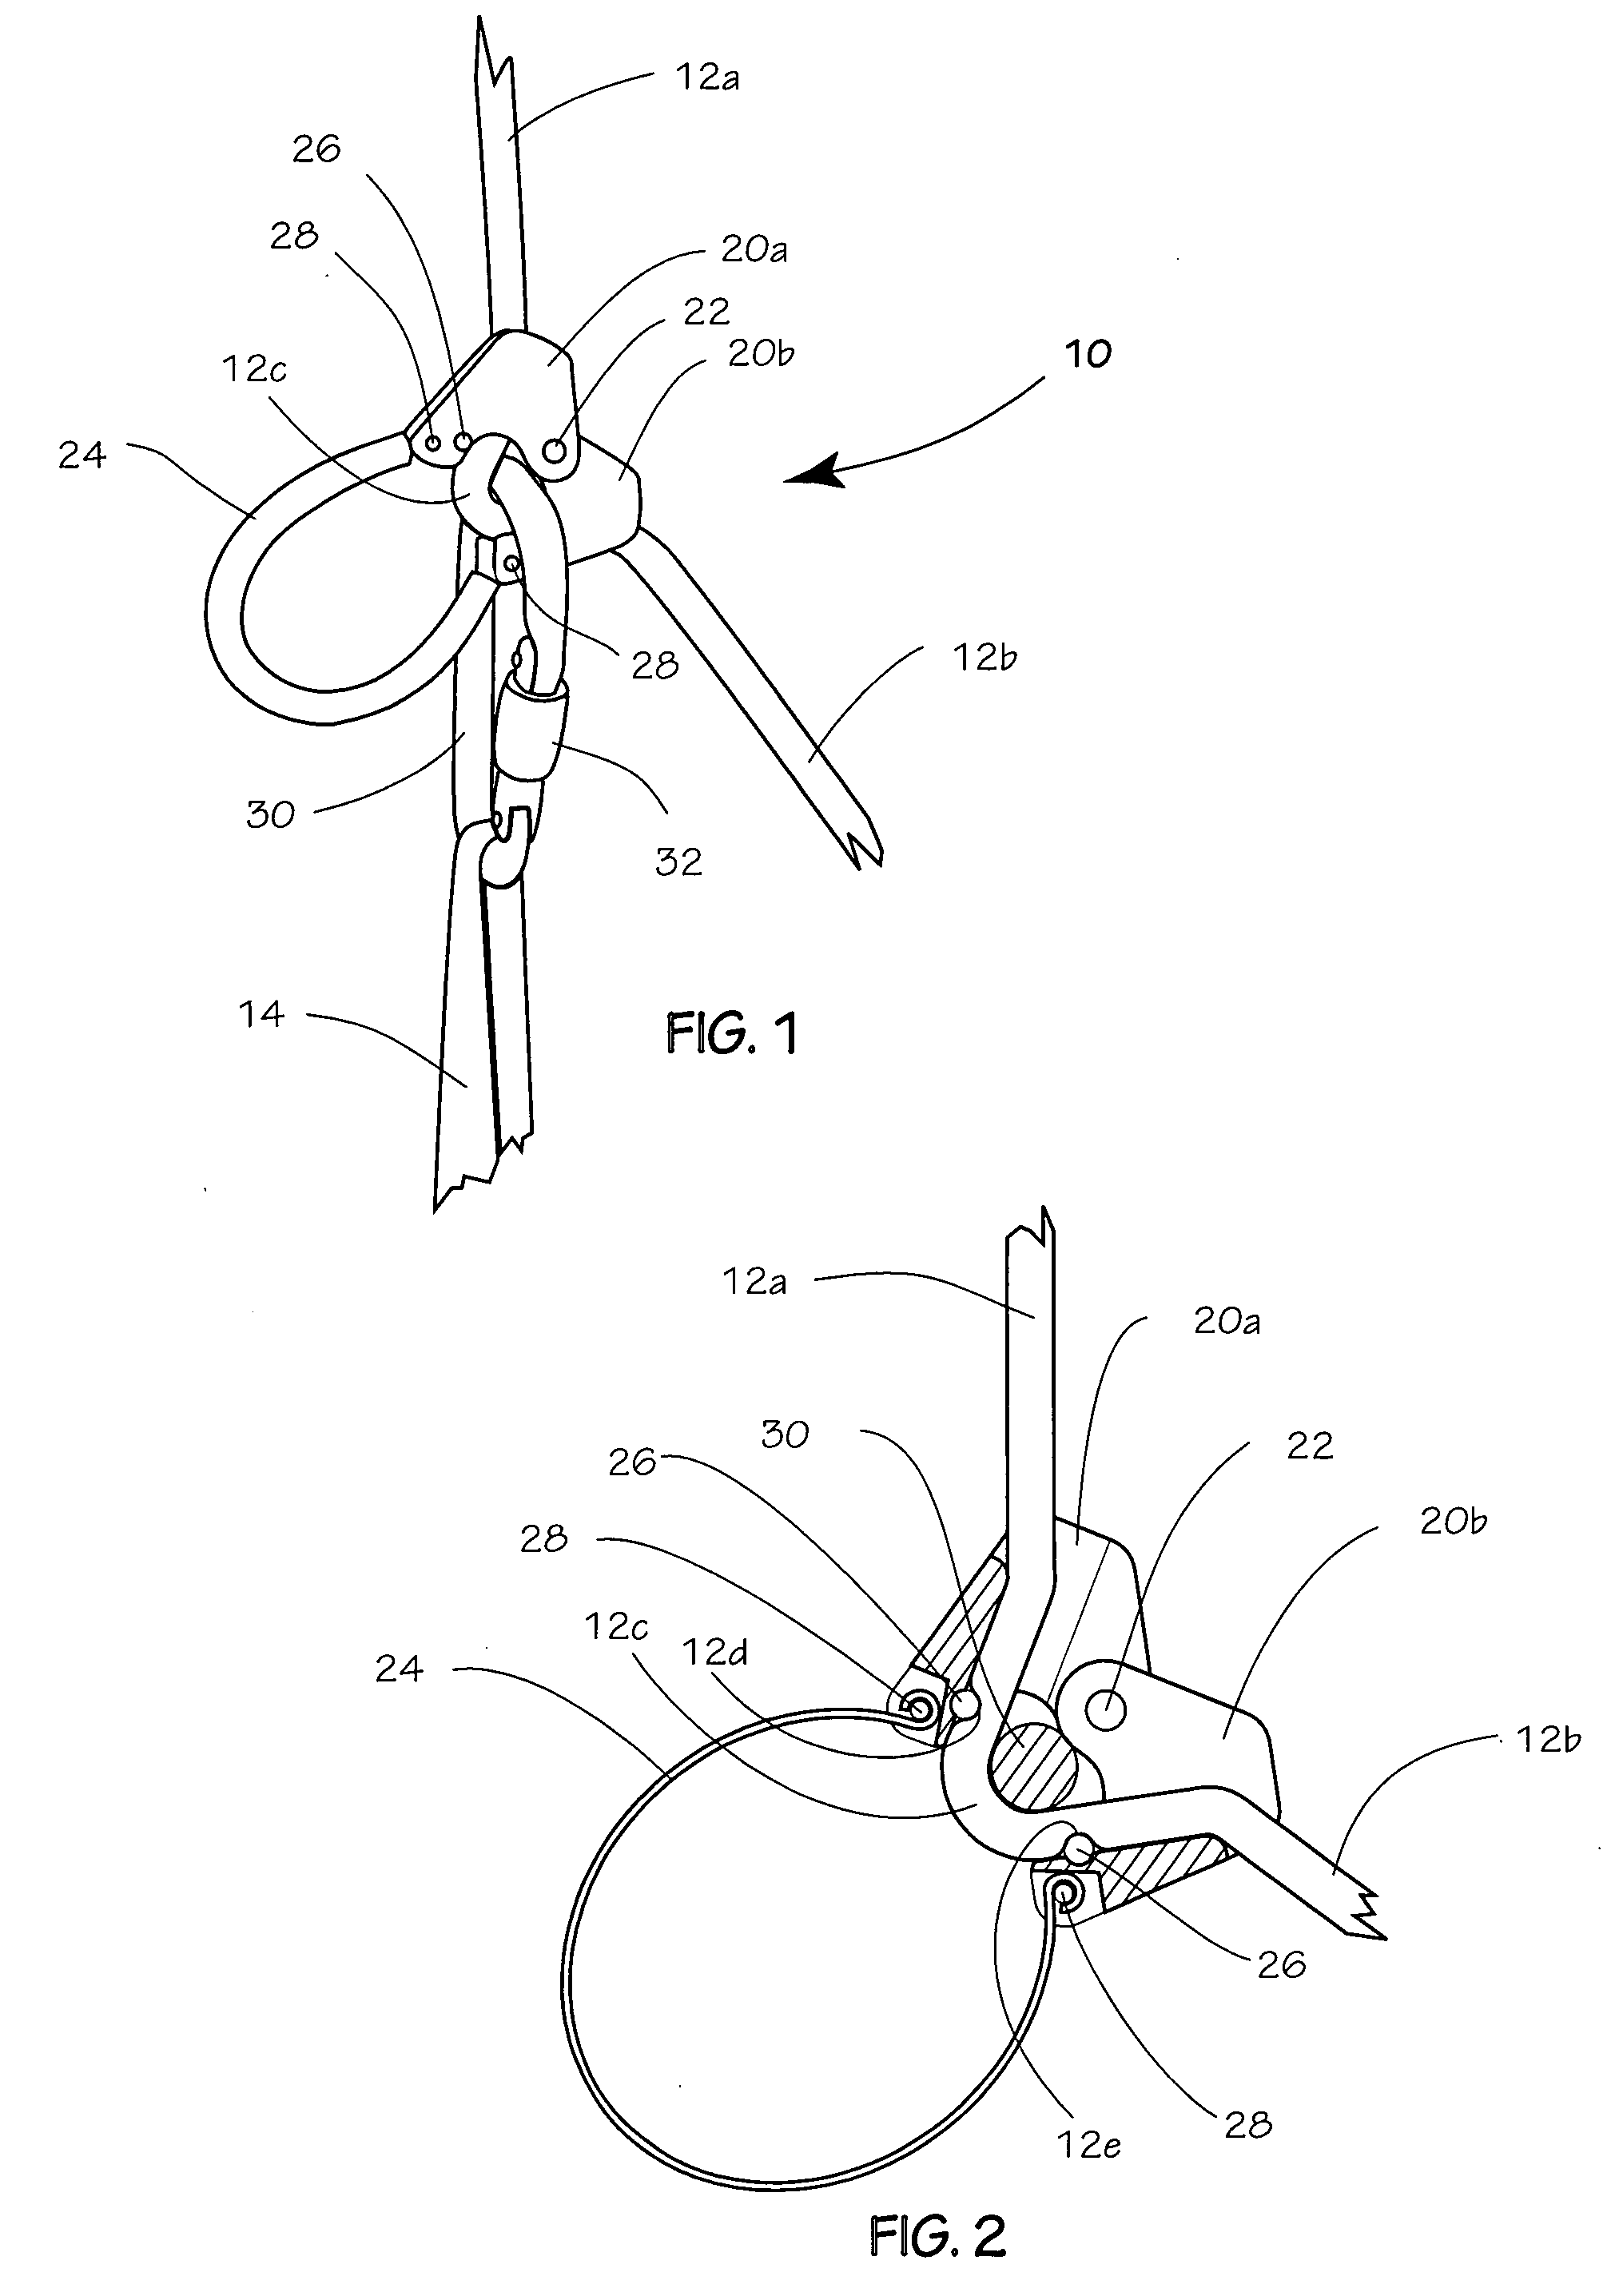 Split tube belay device